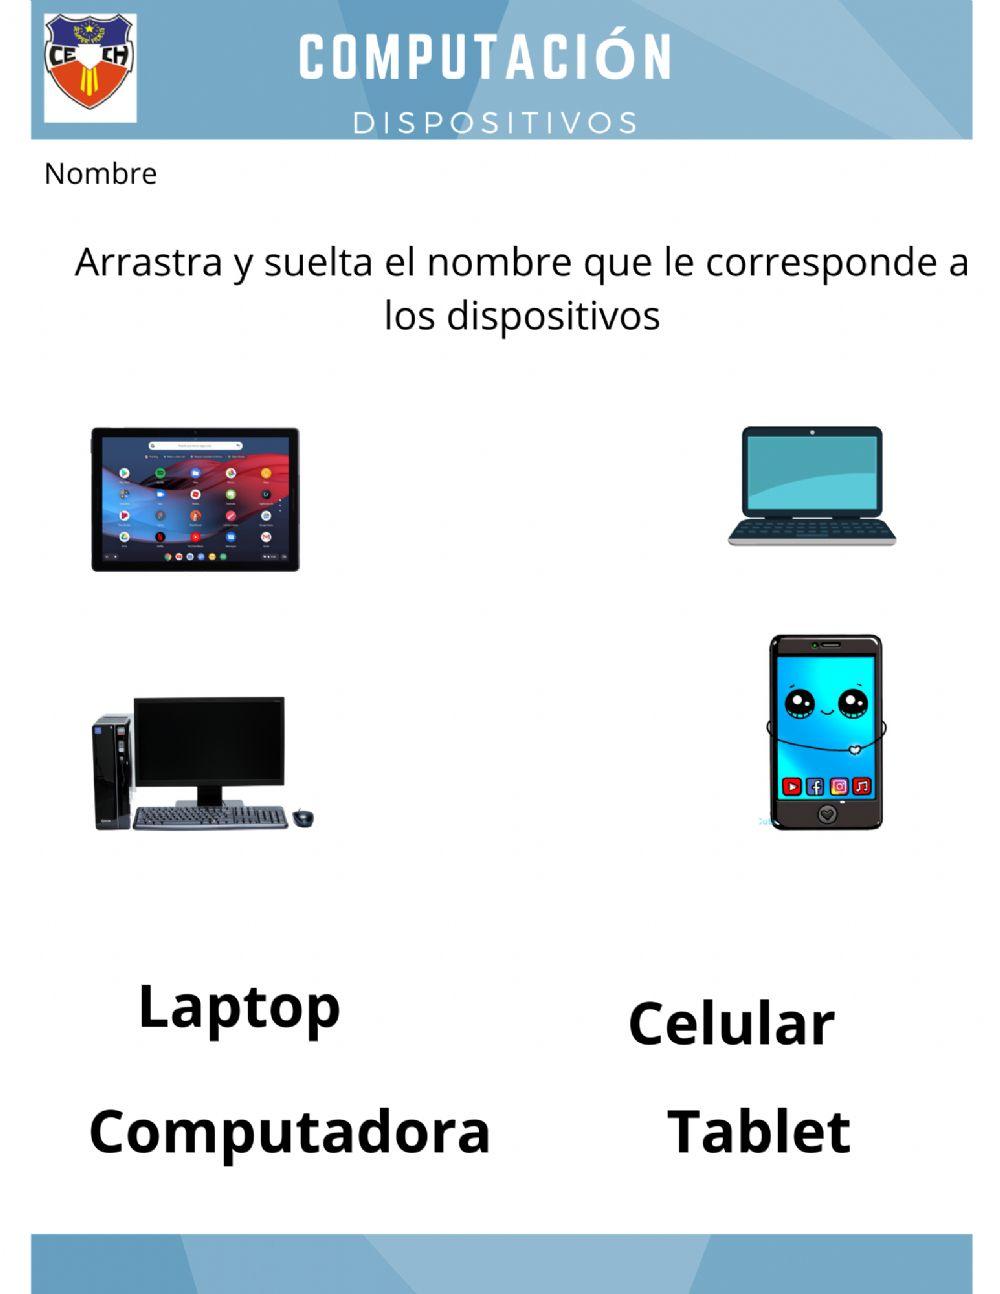 Dispositivos:Celular, Tablet, Laptop